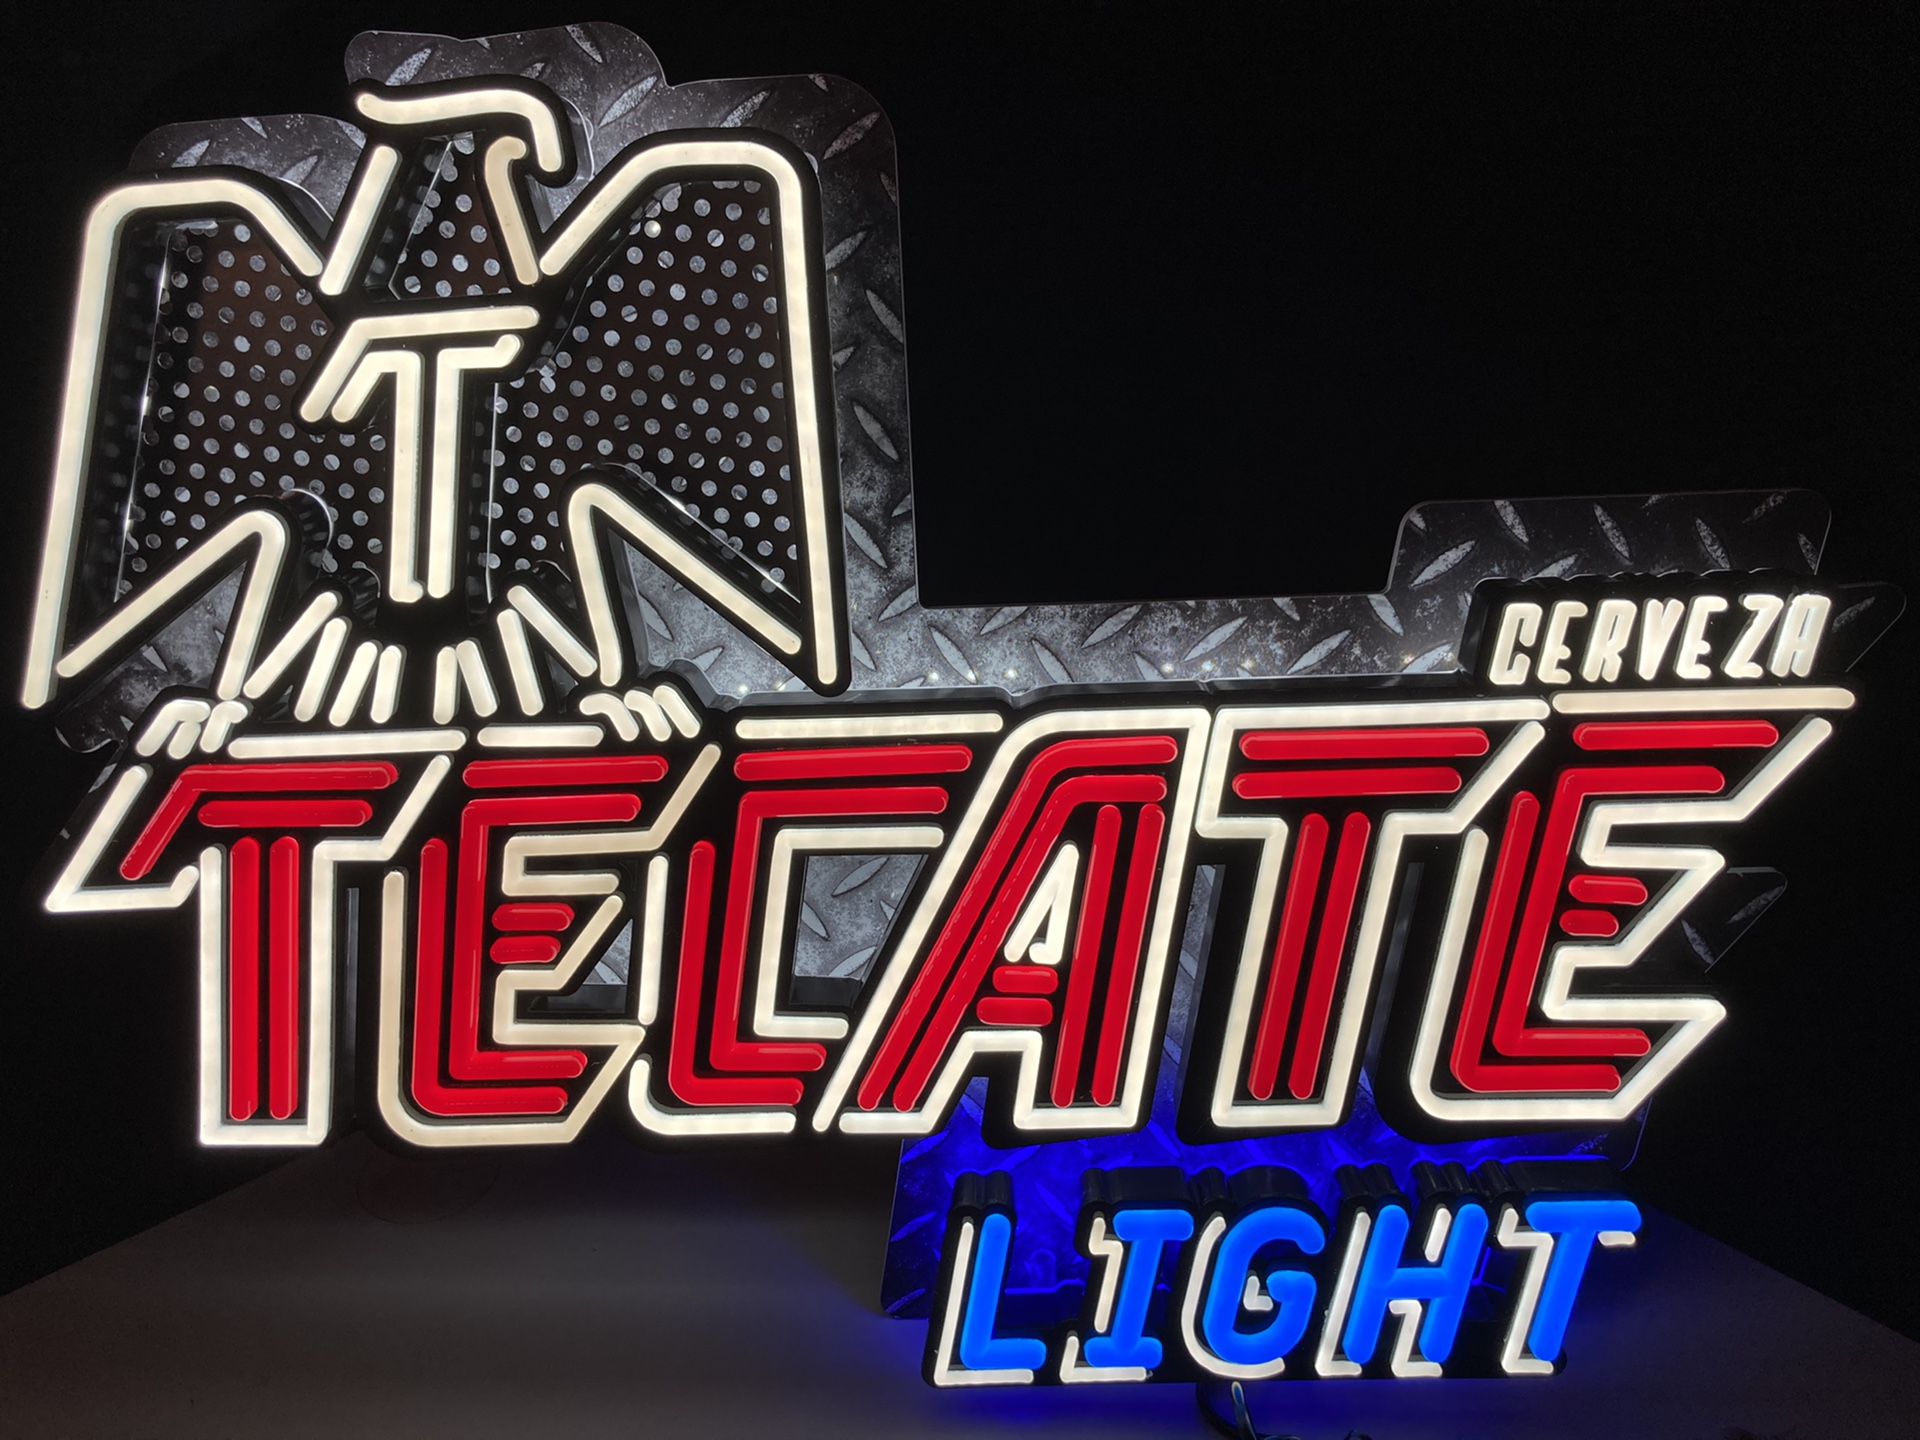 New Tecate Light led beer bar sign light